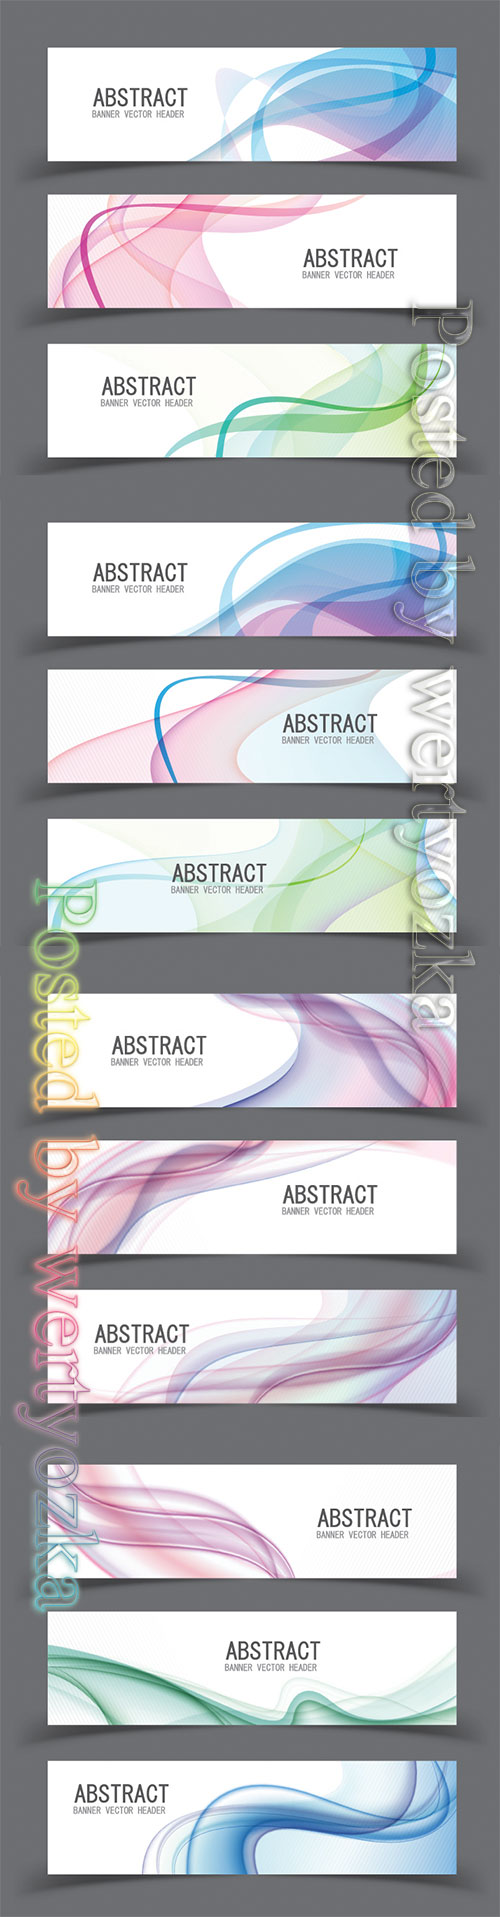 Vector abstract design banner template